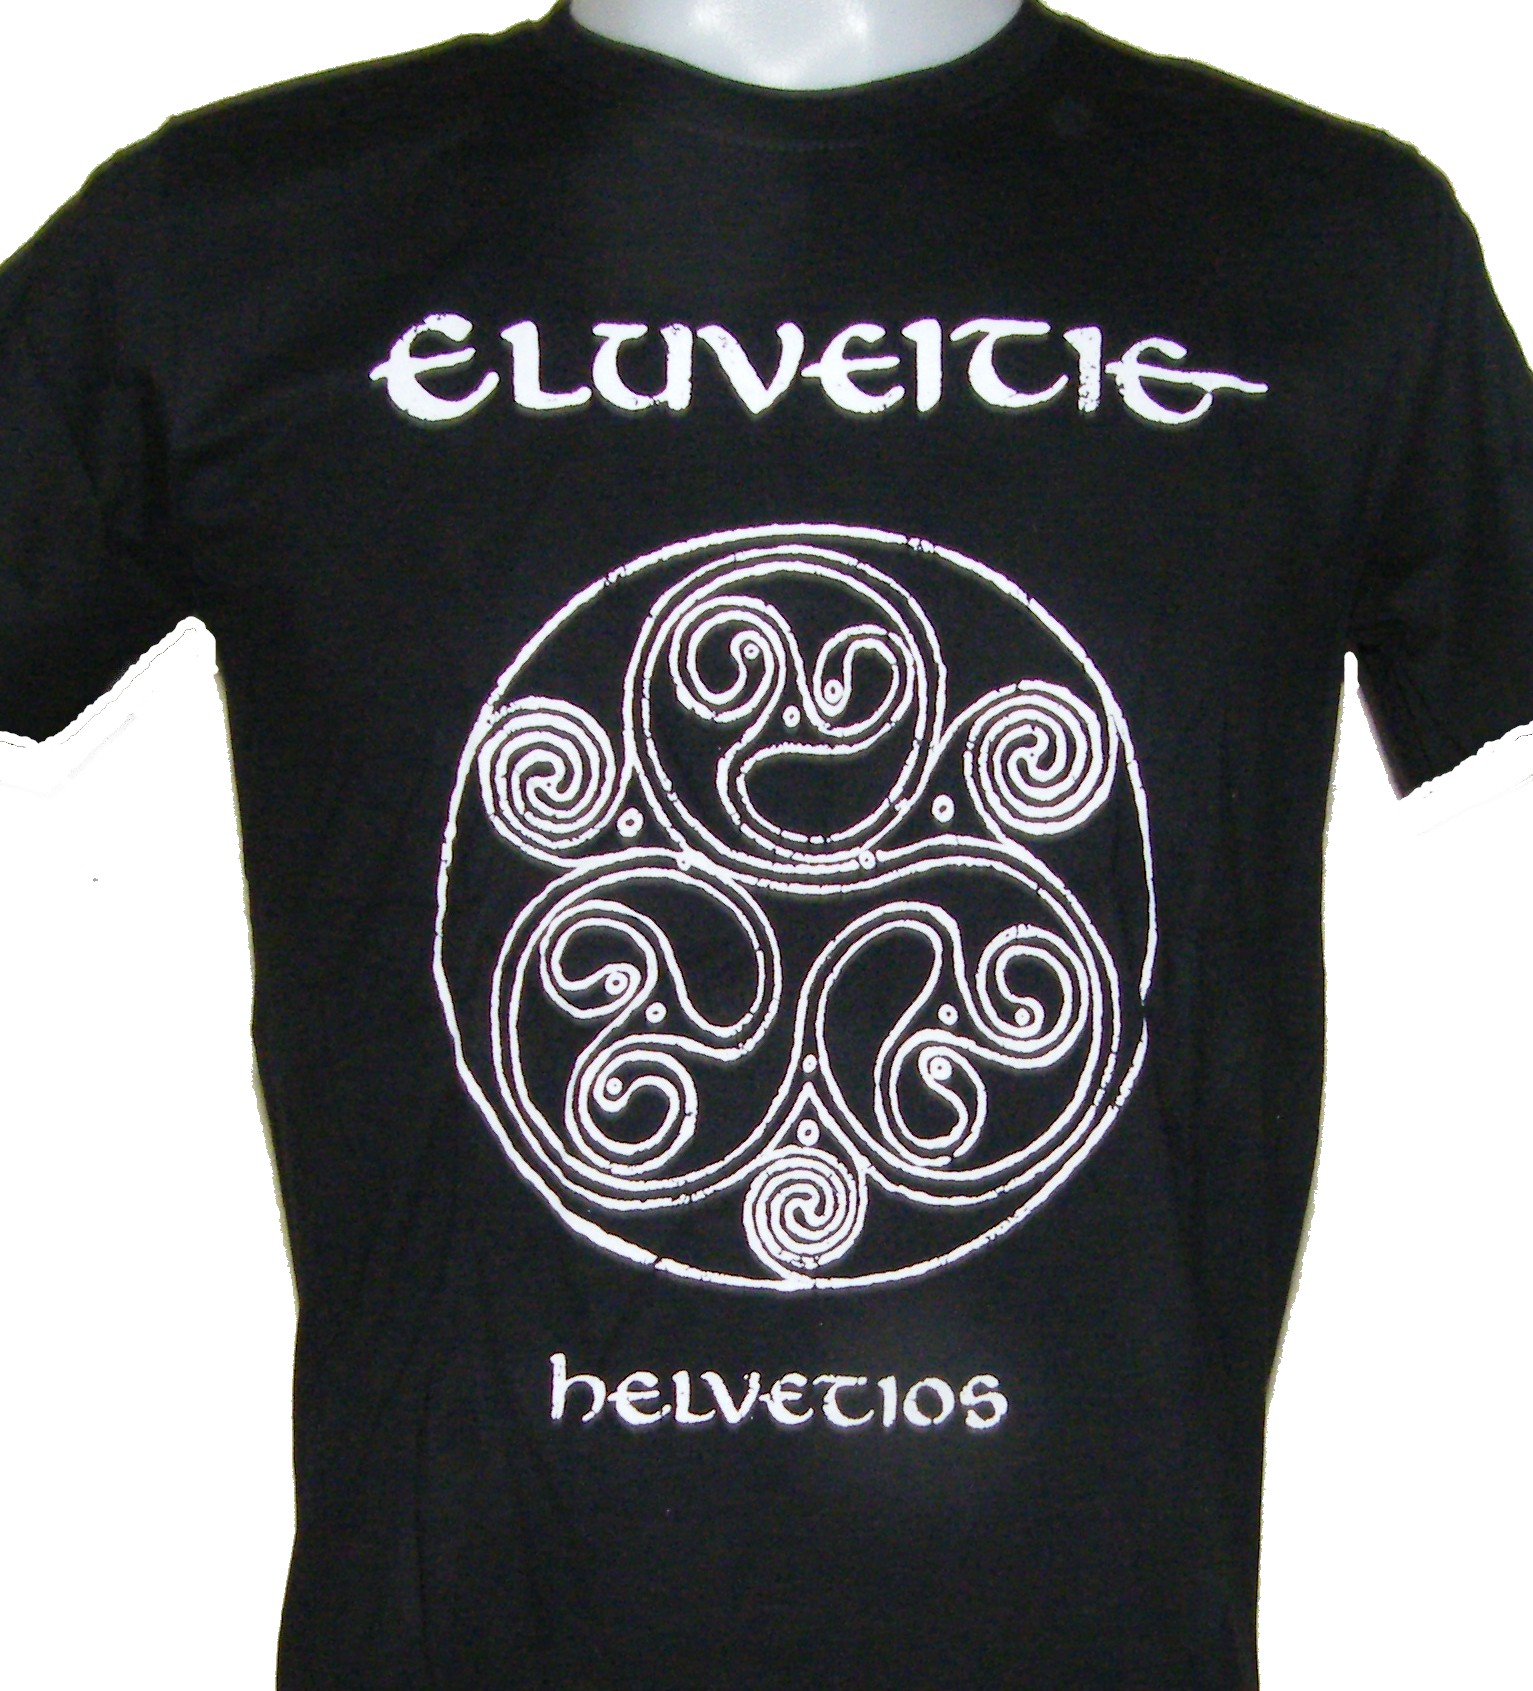 Eluveitie t-shirt Helvetios size S – RoxxBKK